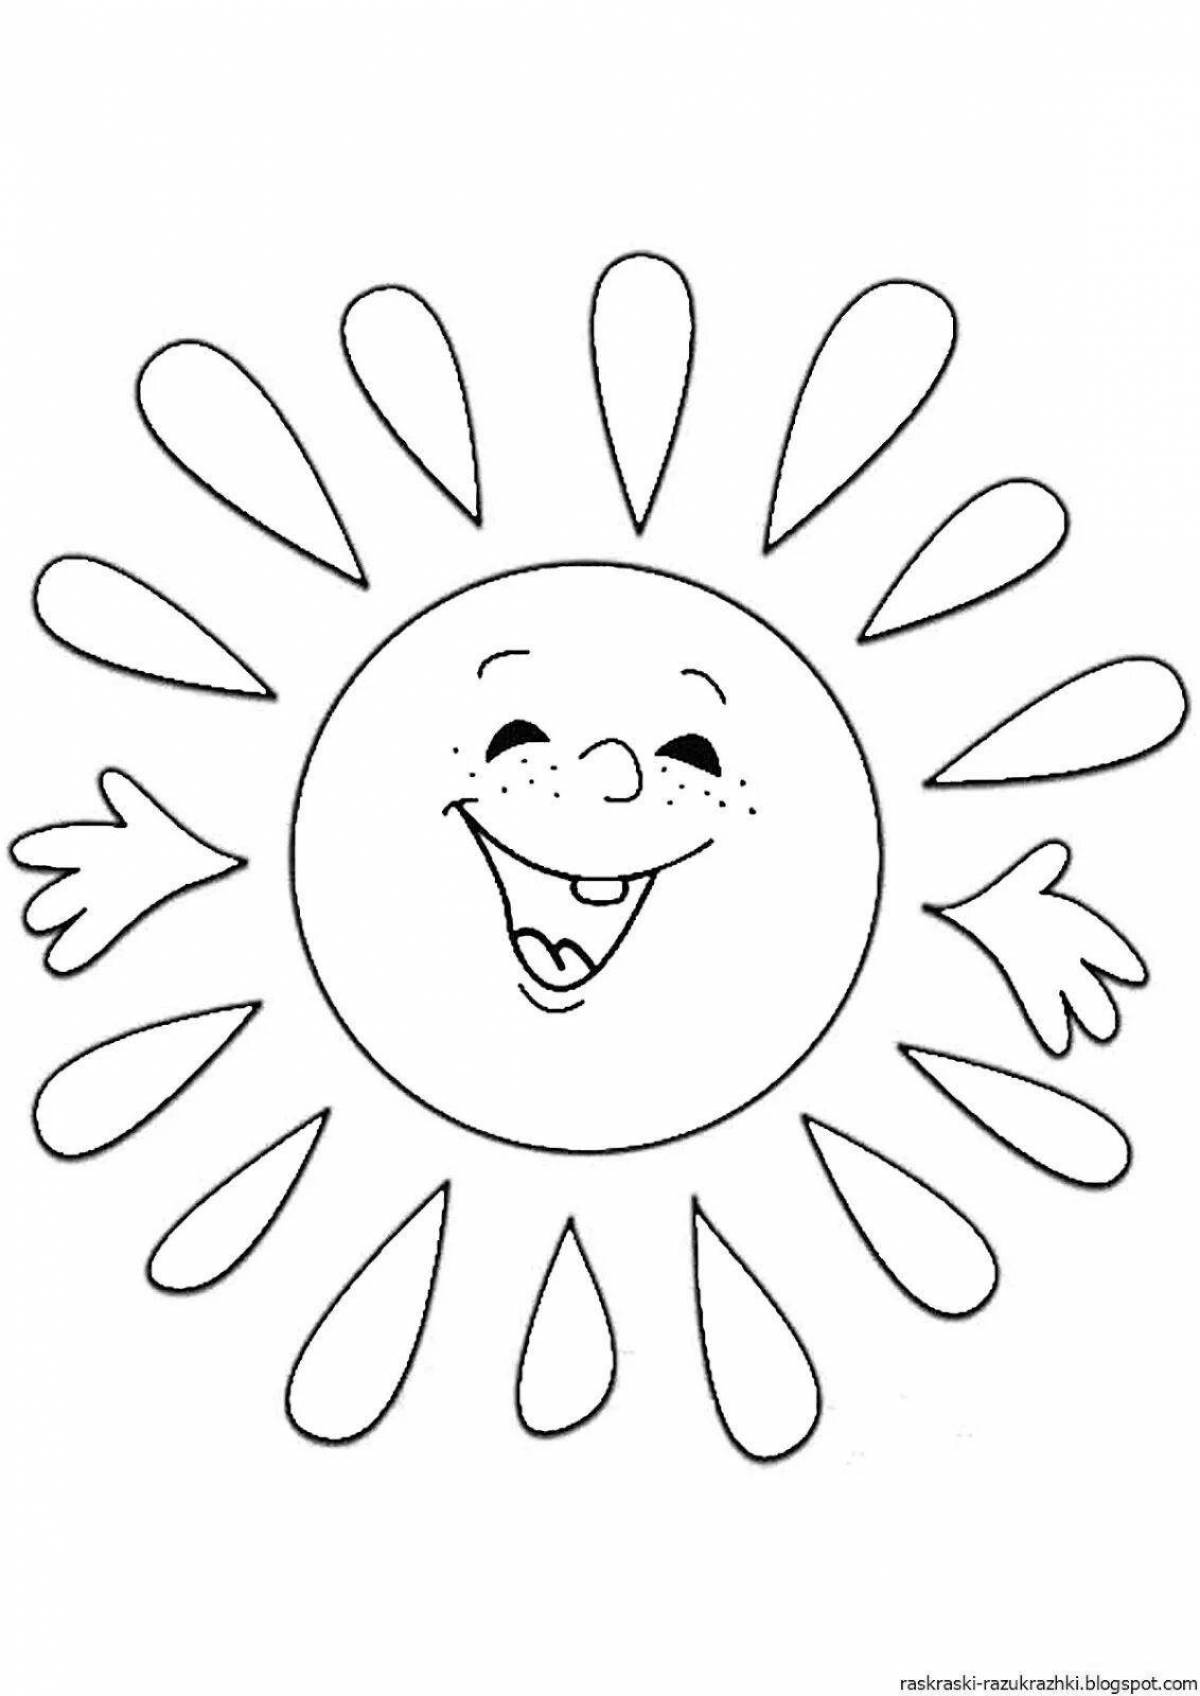 Яркая раскраска солнце для детей 2-3 лет